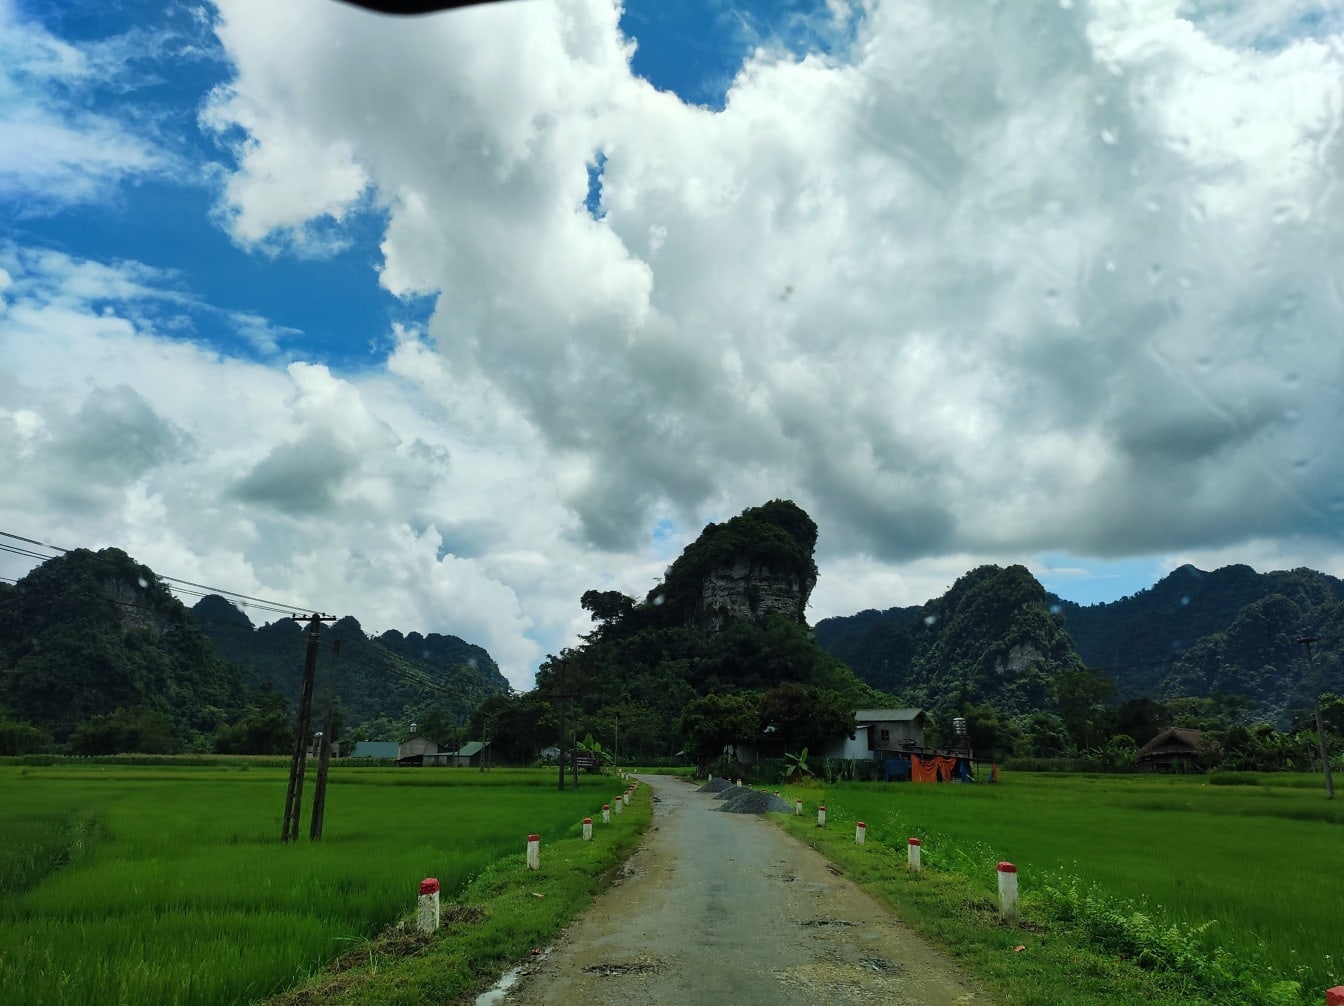 Estrada de asfalto no campo rural no Vietnã